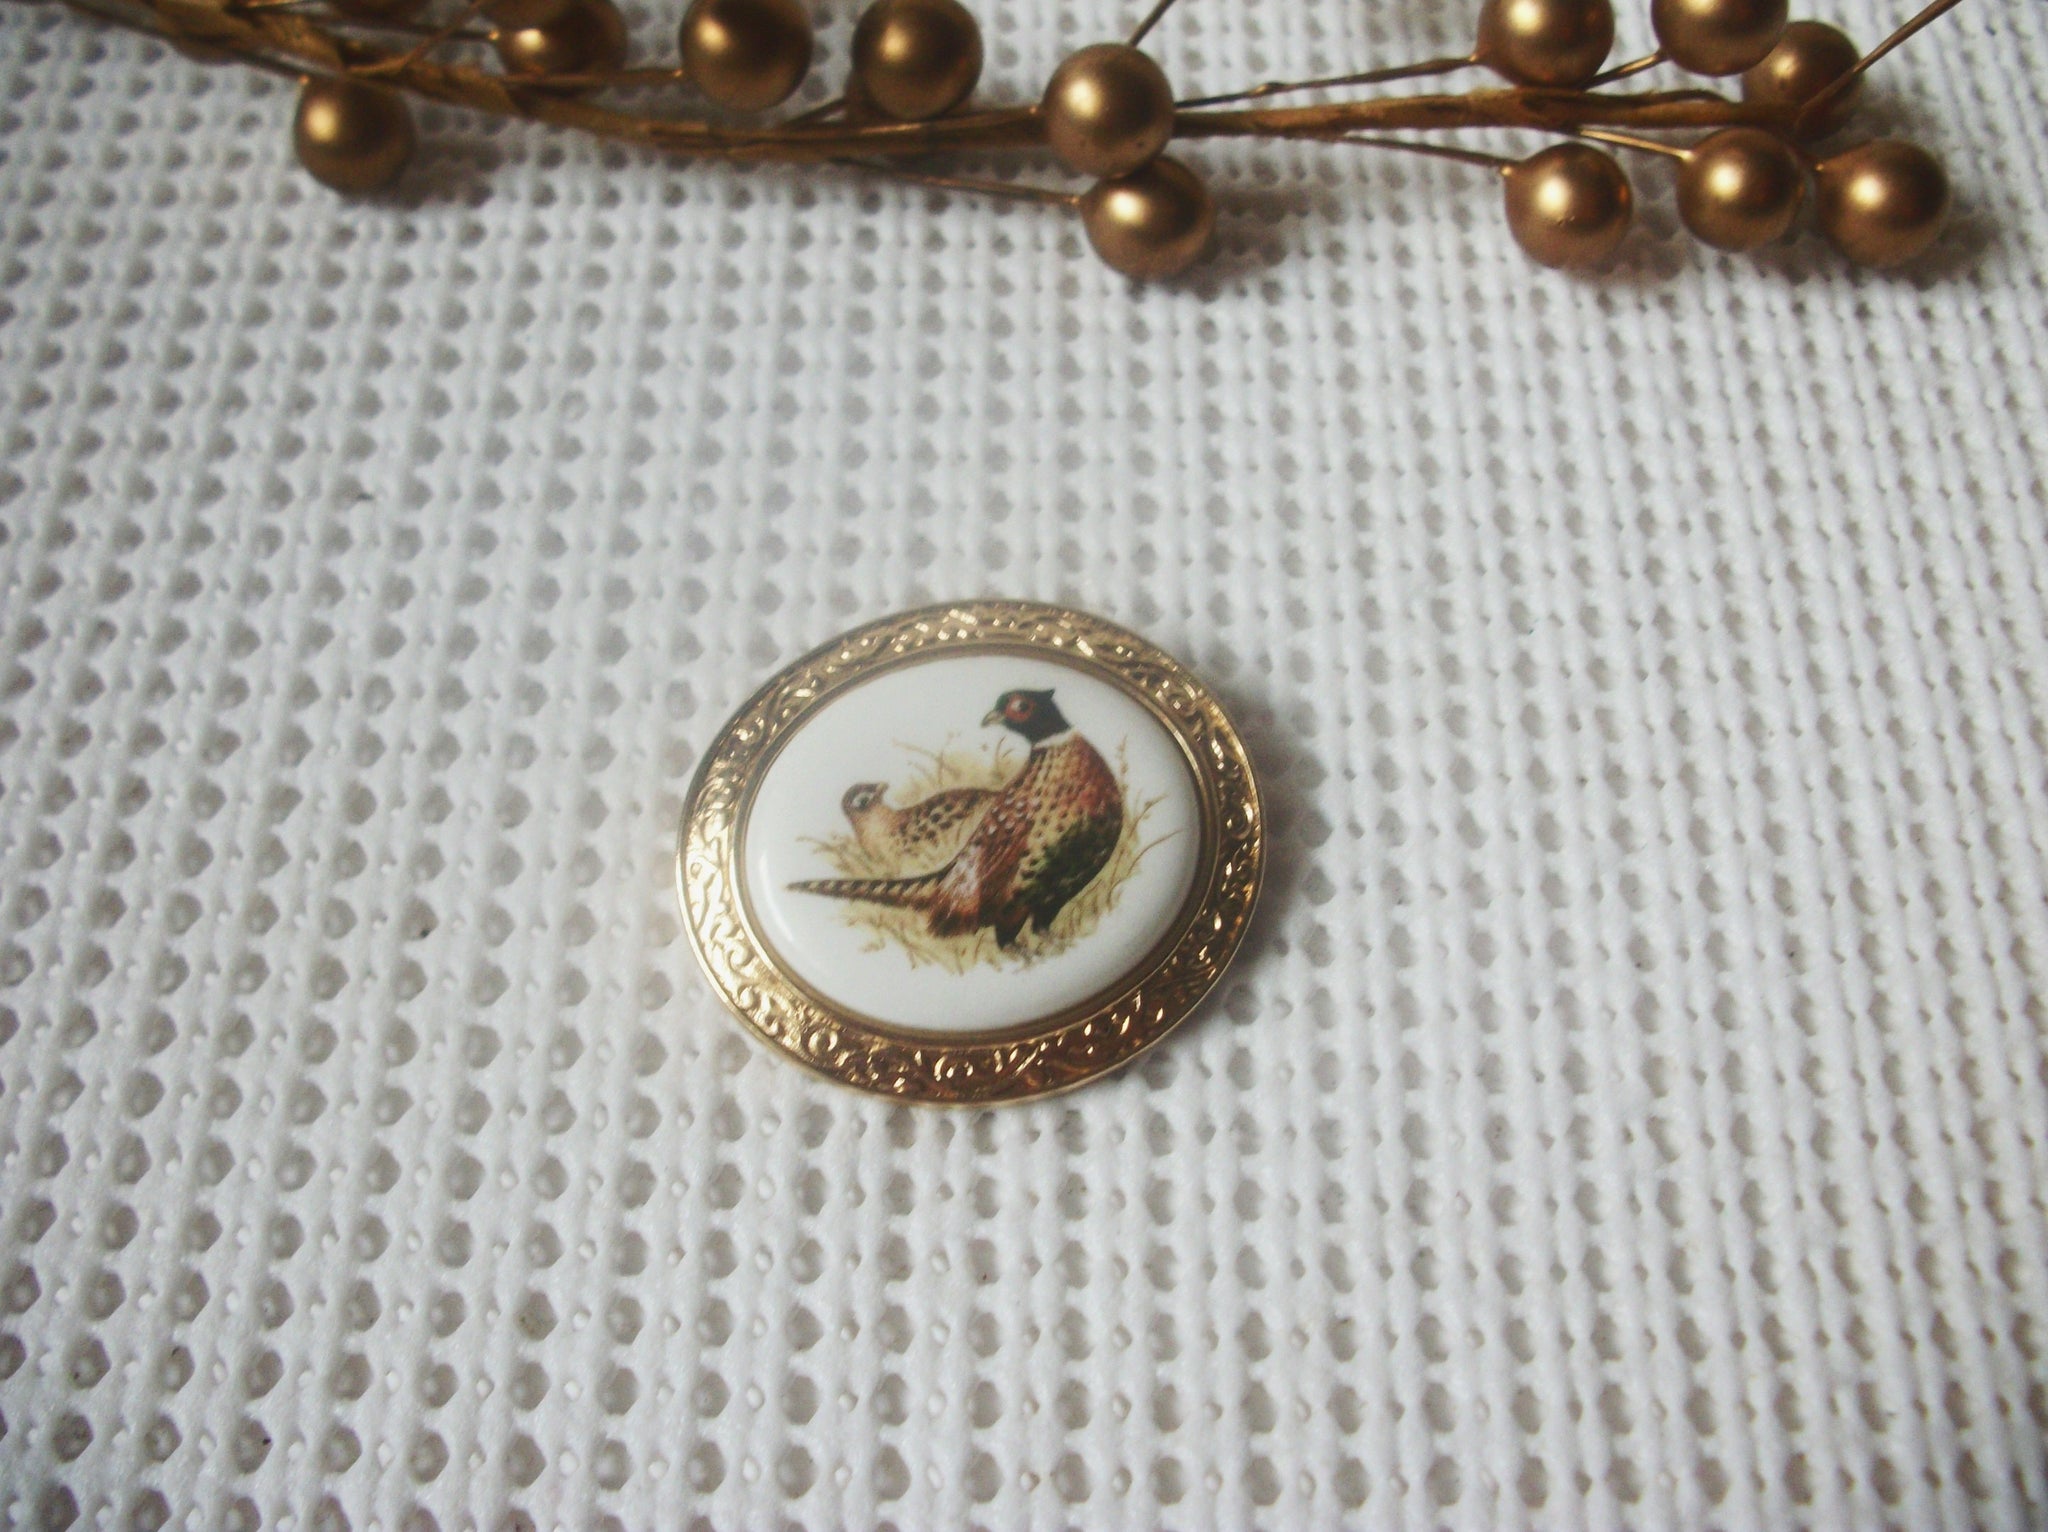 Vintage Avon "Rich Splendor of Fall The Pheasant" Brooch Pin Pendant 52017